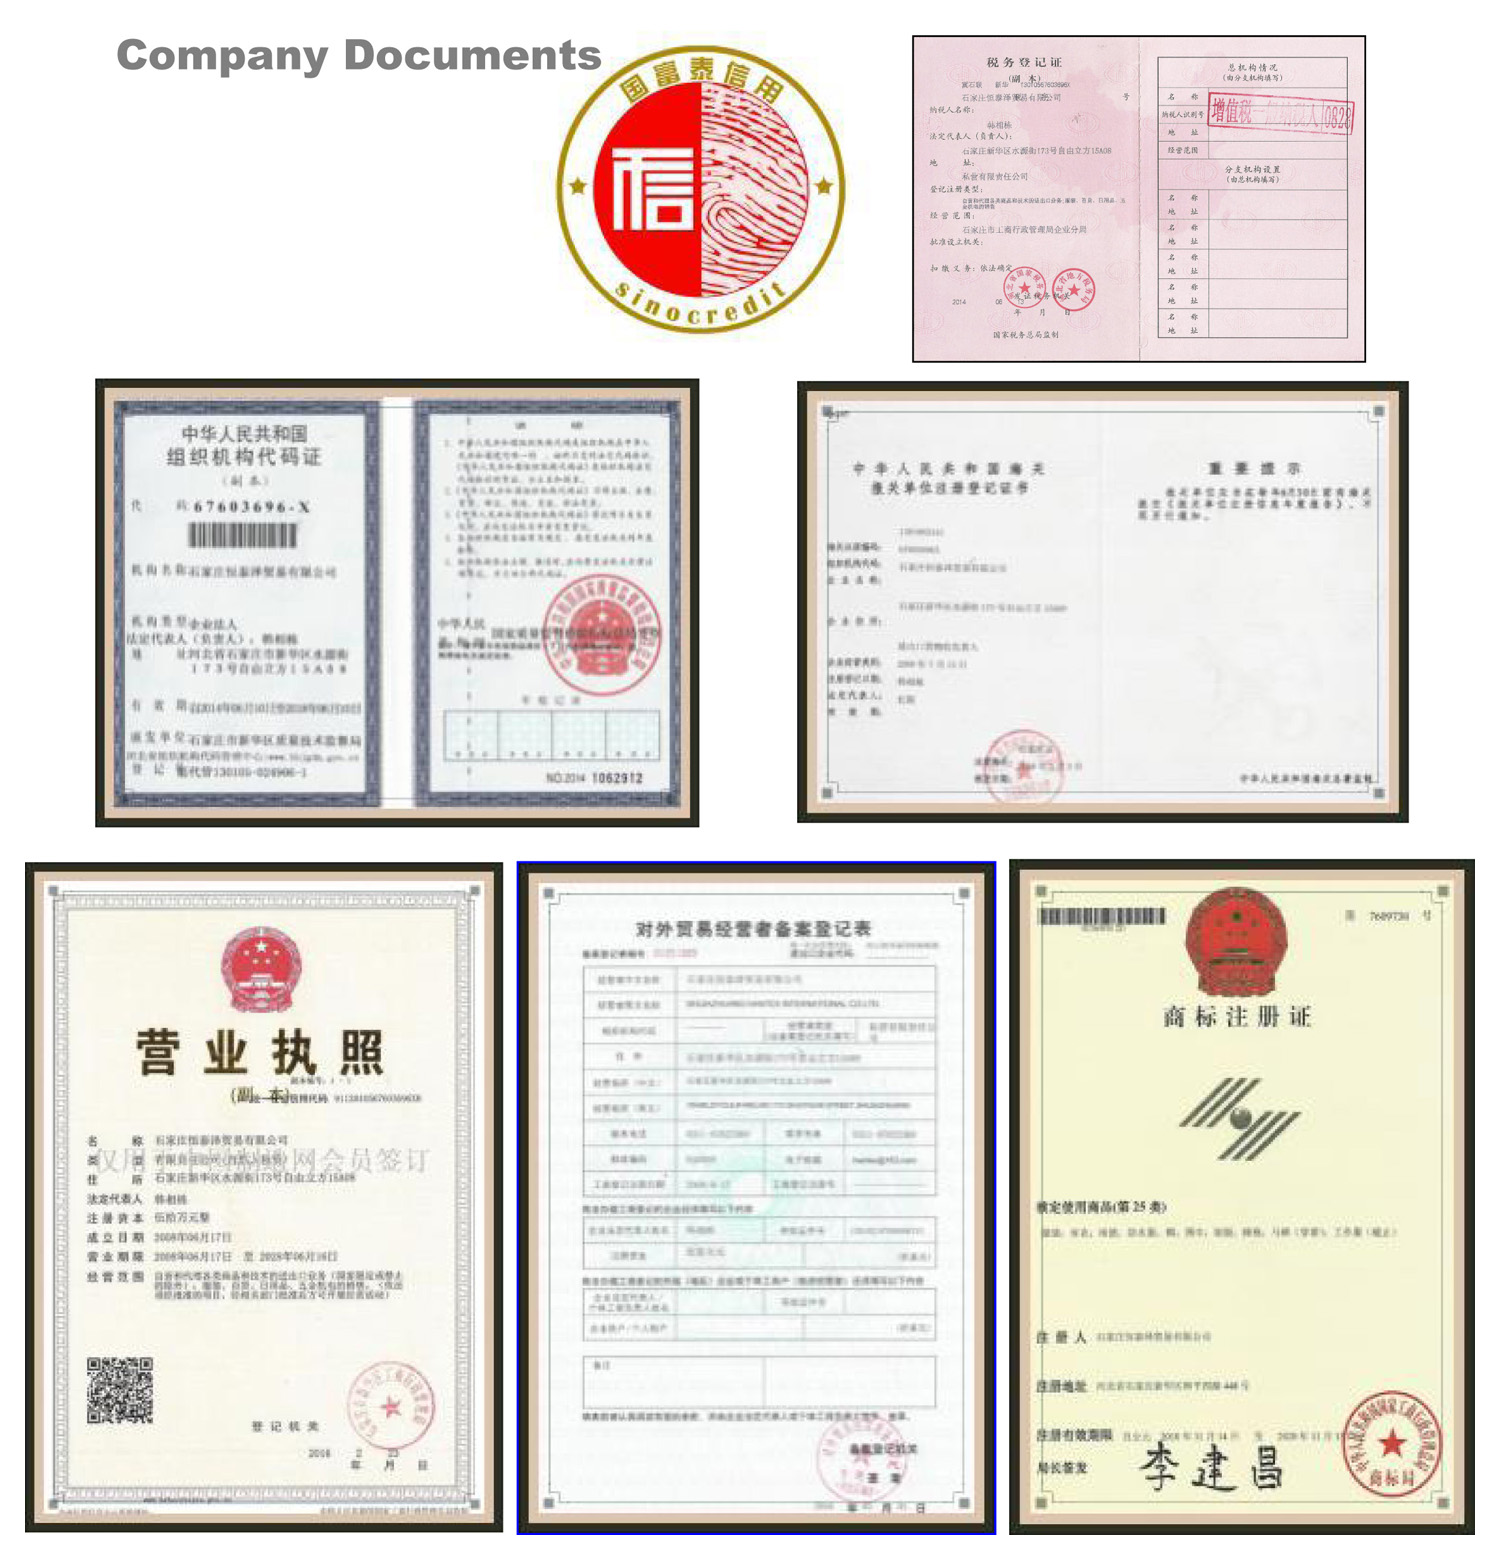 1 Company Documents